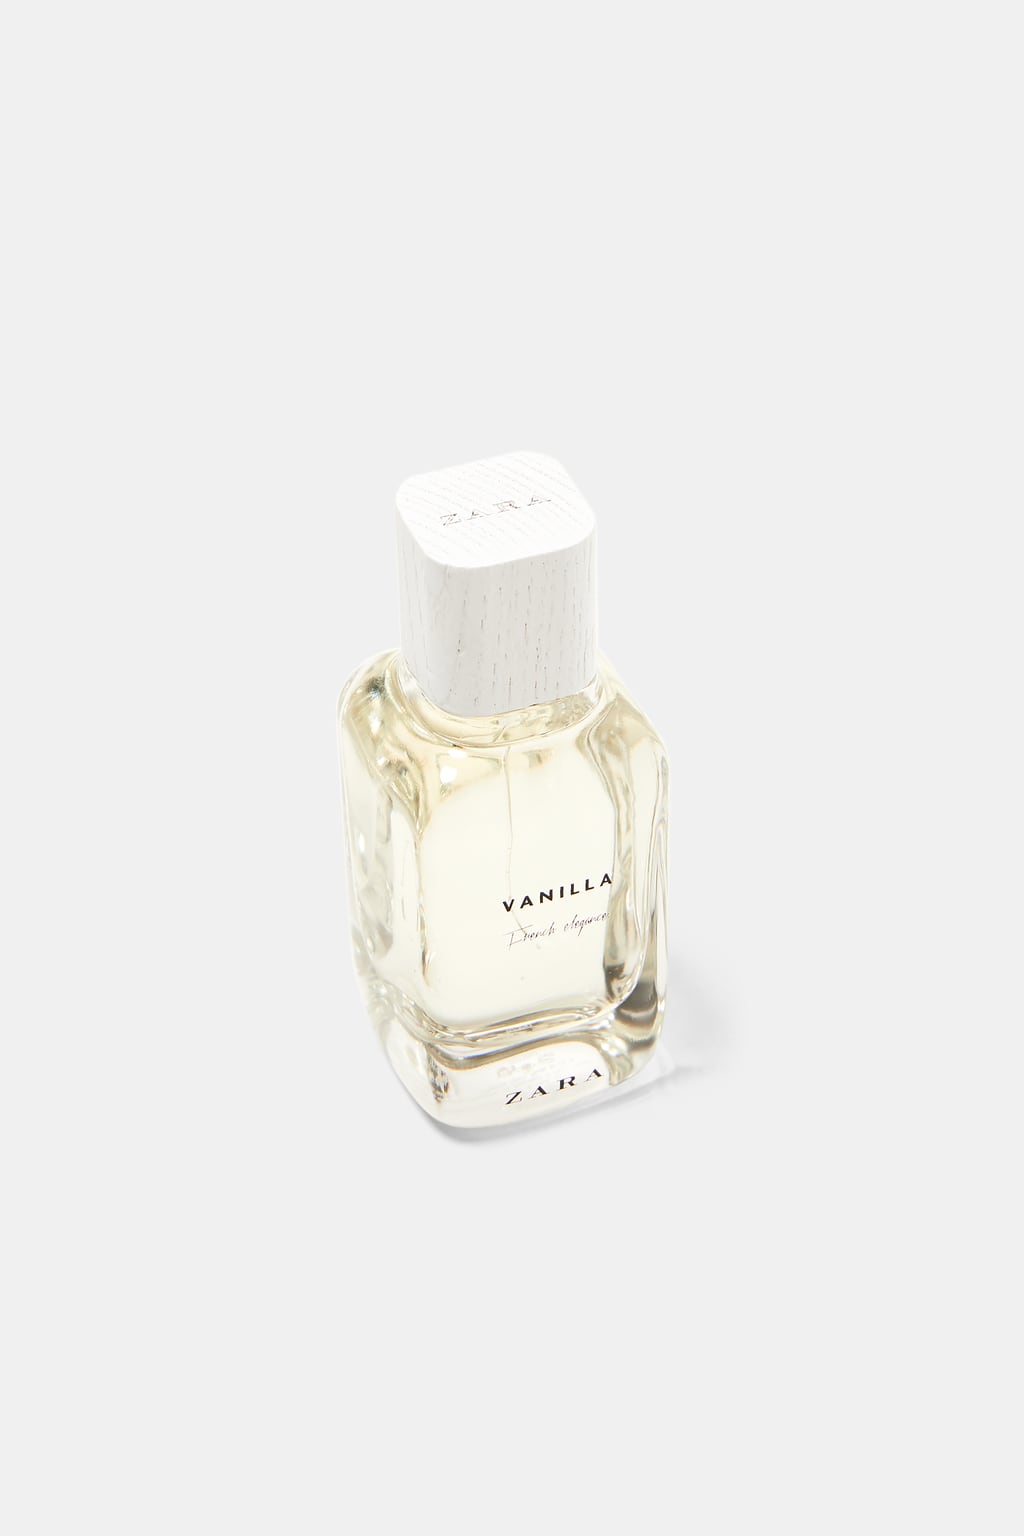 Vanilla - French Elegance Zara perfume - a fragrance for women and men 2018